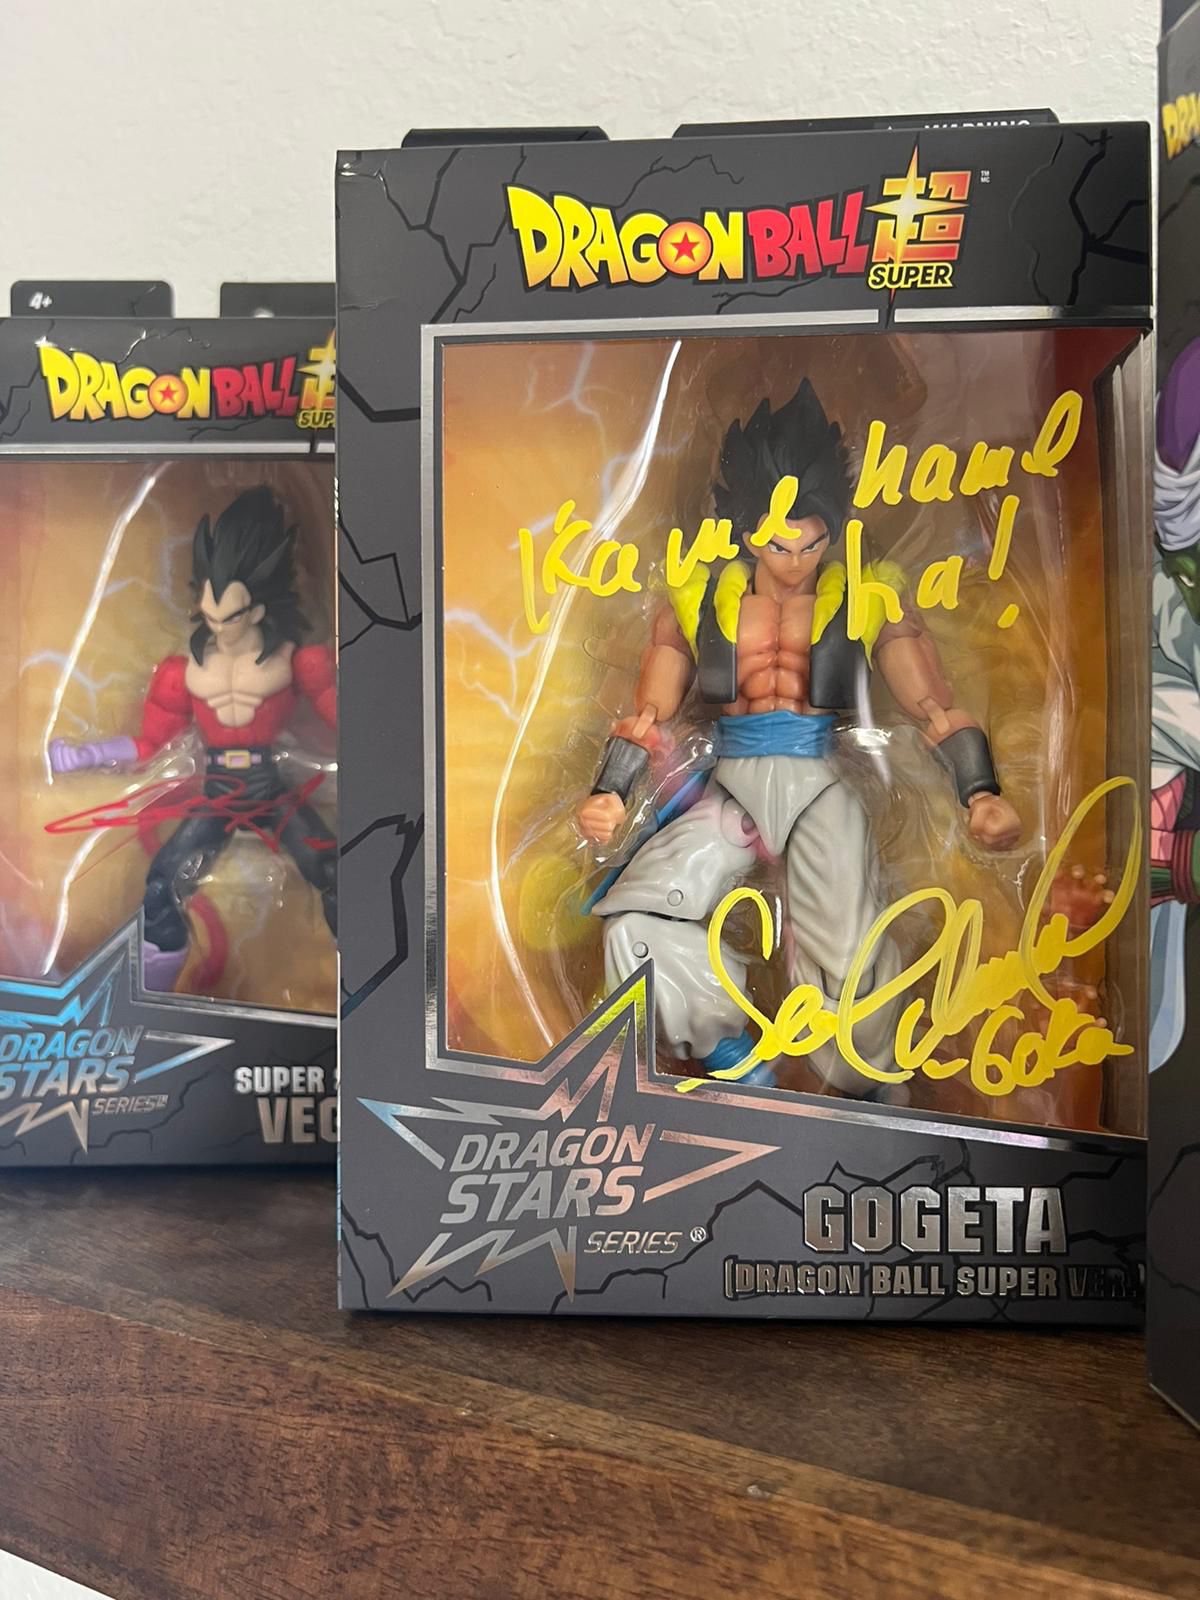 Autographed  Dragon Ball Z Action Figures $50.00 Each